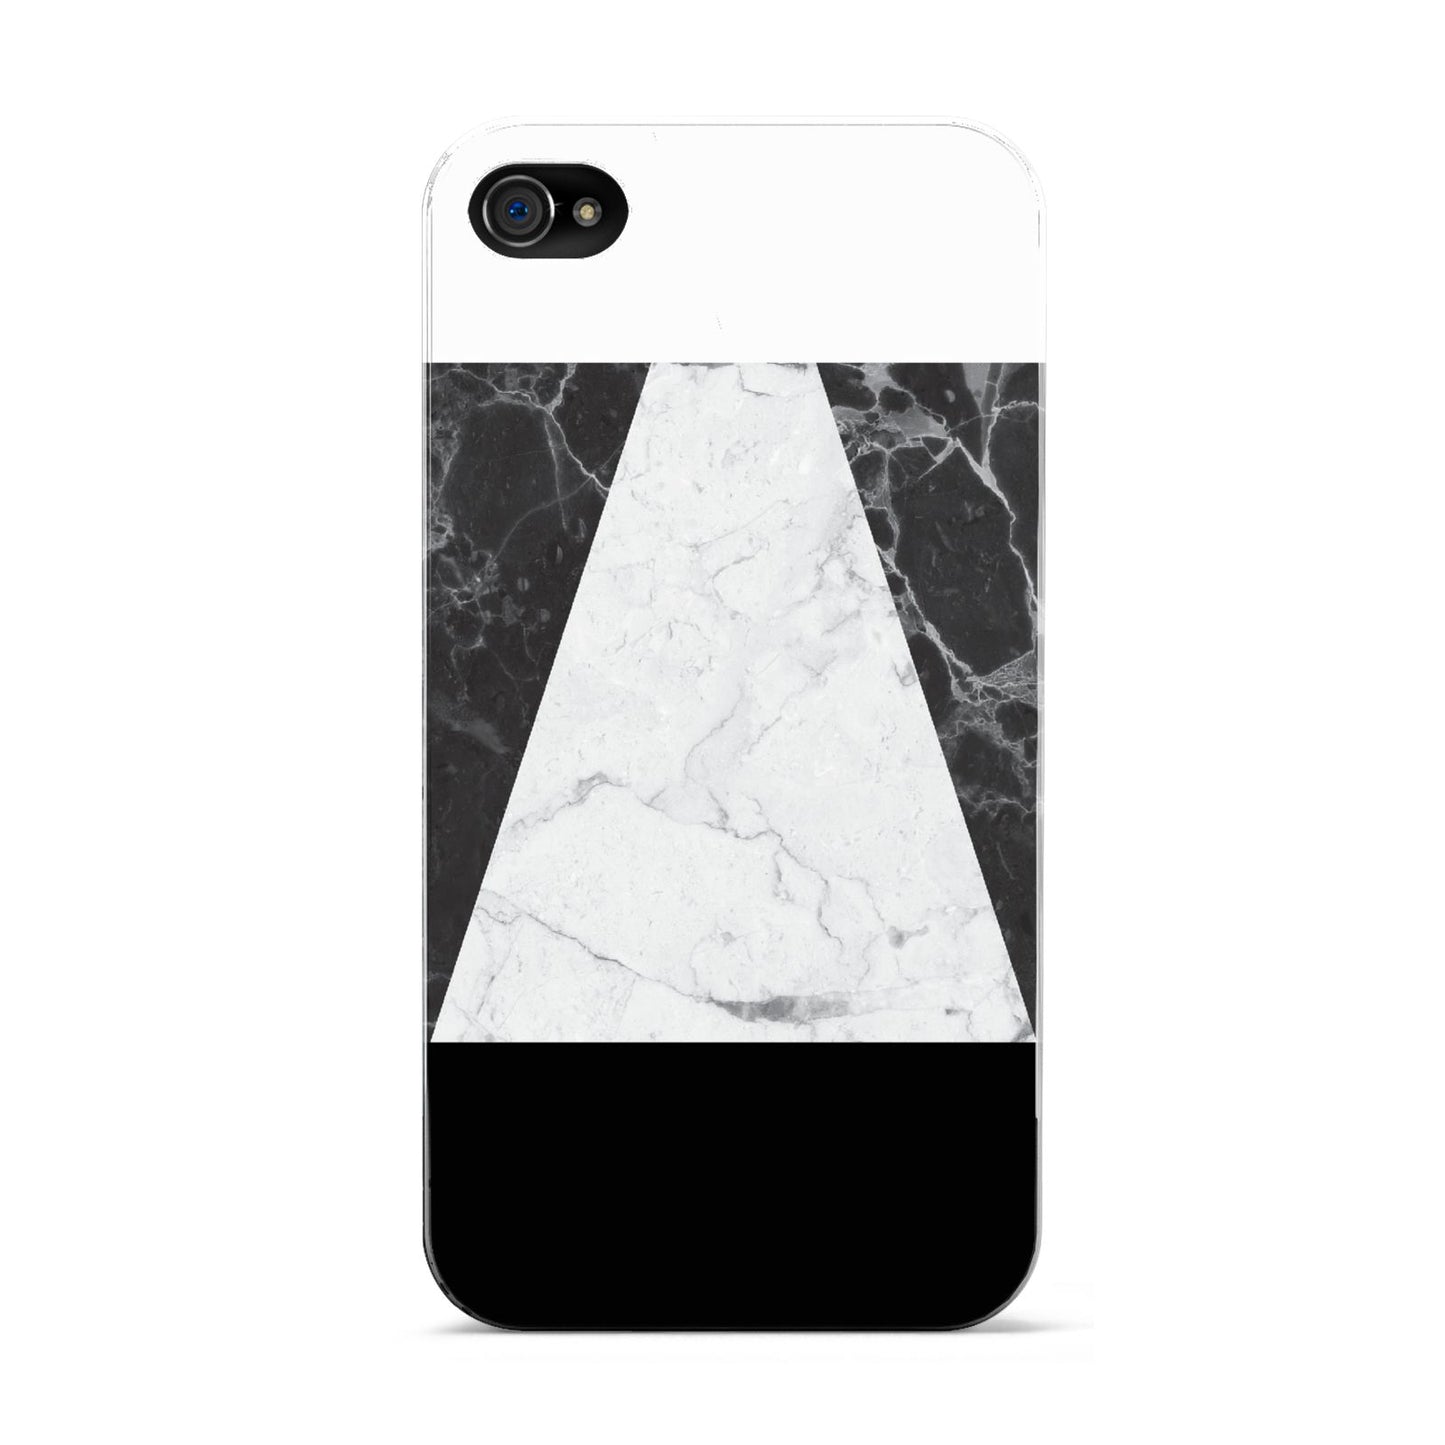 Marble White Black Apple iPhone 4s Case